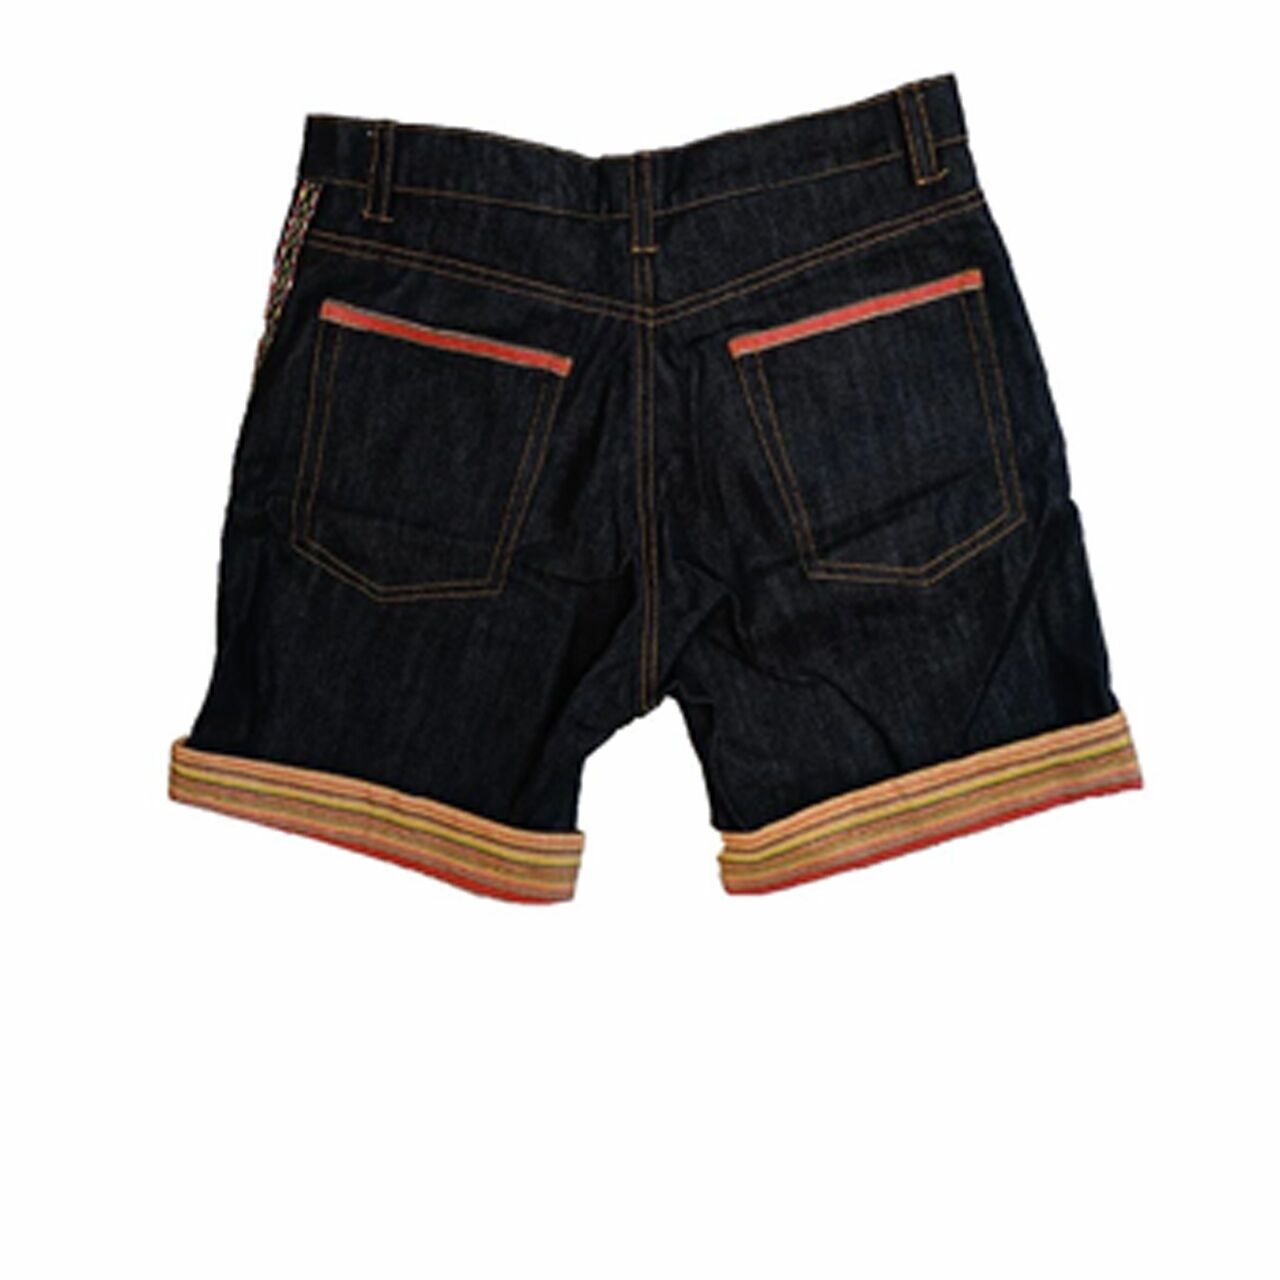 Torajamelo Black Shorts